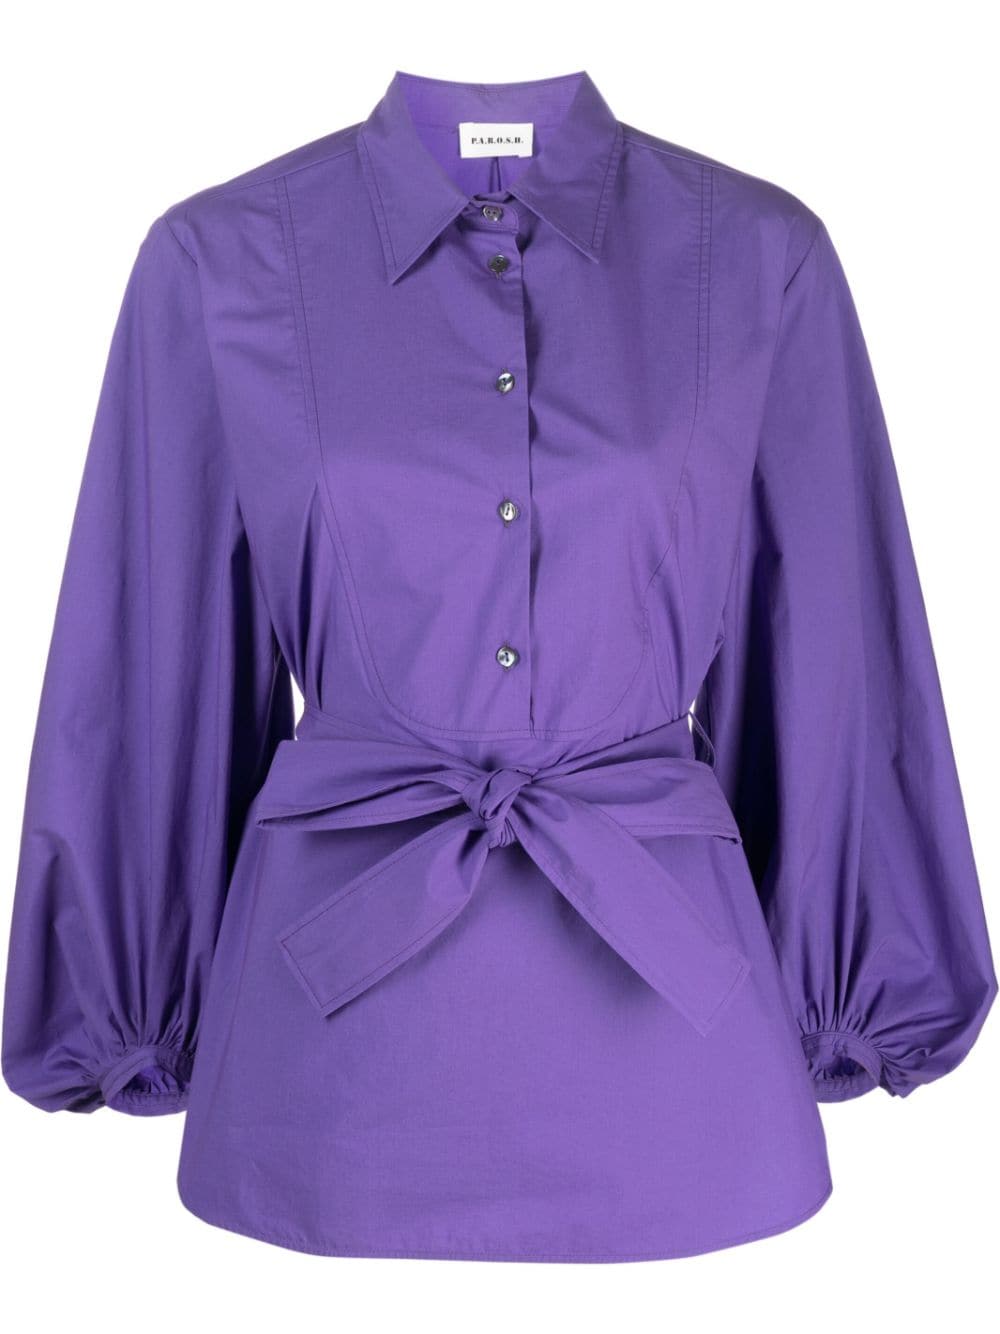 P.A.R.O.S.H. Bluse mit Gürtel - Violett von P.A.R.O.S.H.